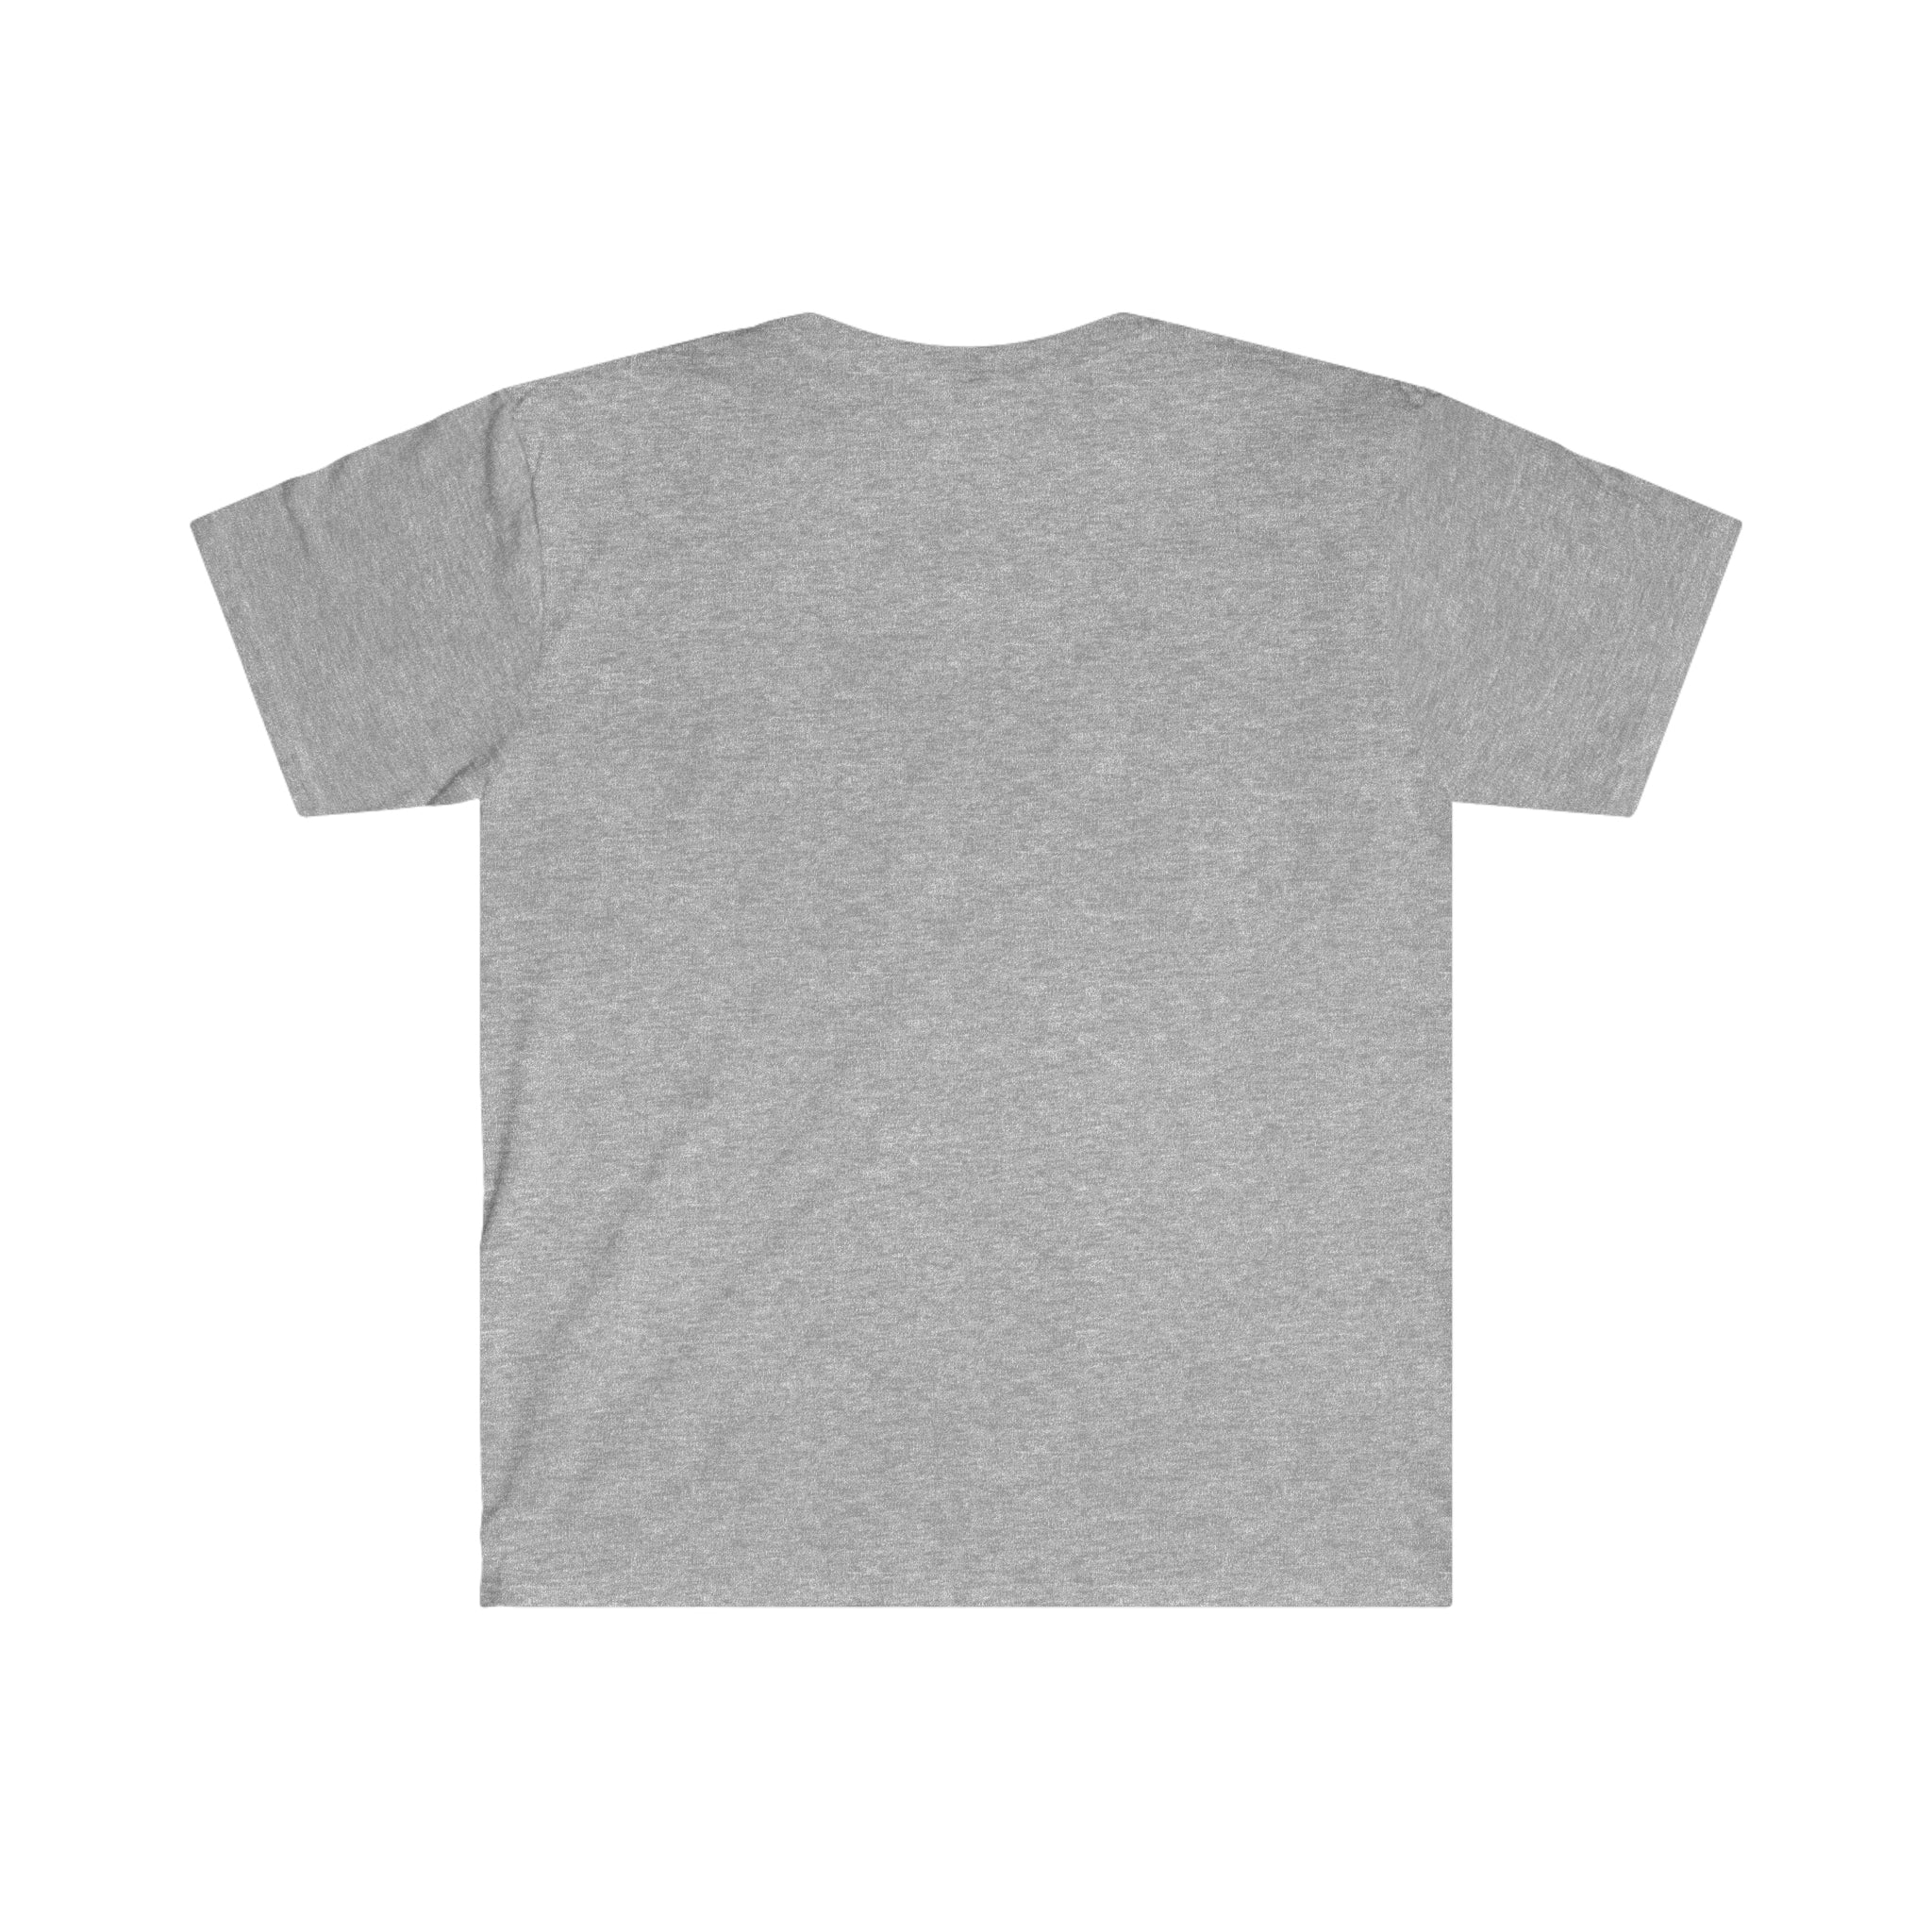 NEW YORK CITY Unisex Softstyle T-Shirt John Lennon